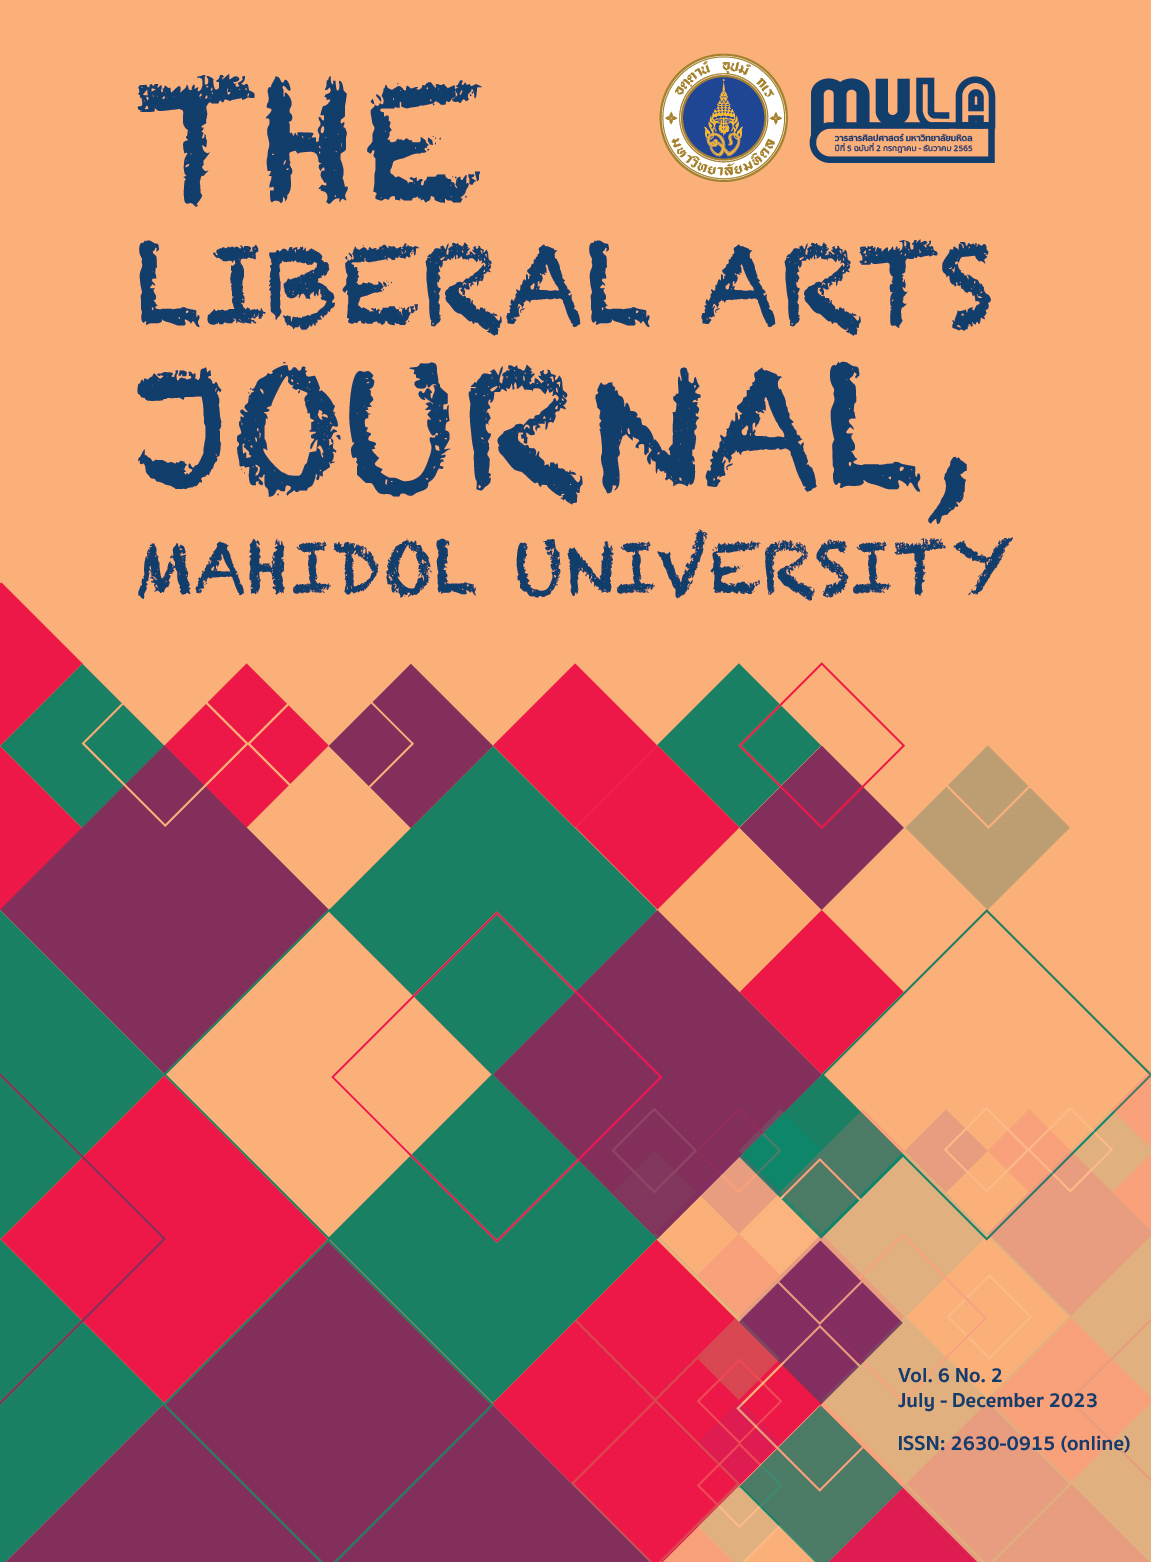 					View Vol. 6 No. 2 (2023): The Liberal Arts Journal, Mahidol University
				